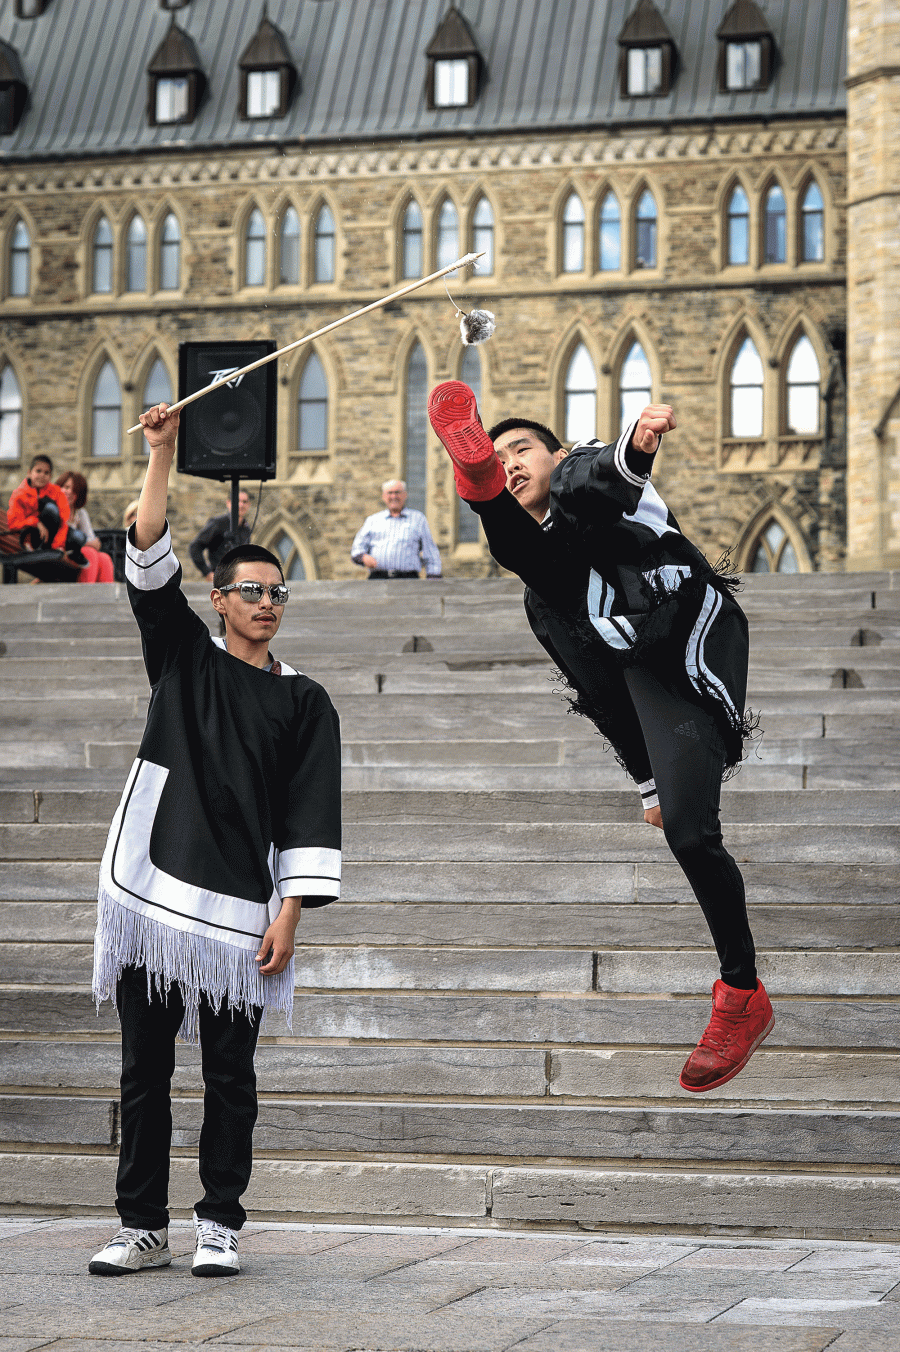 Nunavut Sivuniqsavut students Bertrum Elatiak and Marcus Kokak demonstrate the high kick at an event on Parliament Hill.